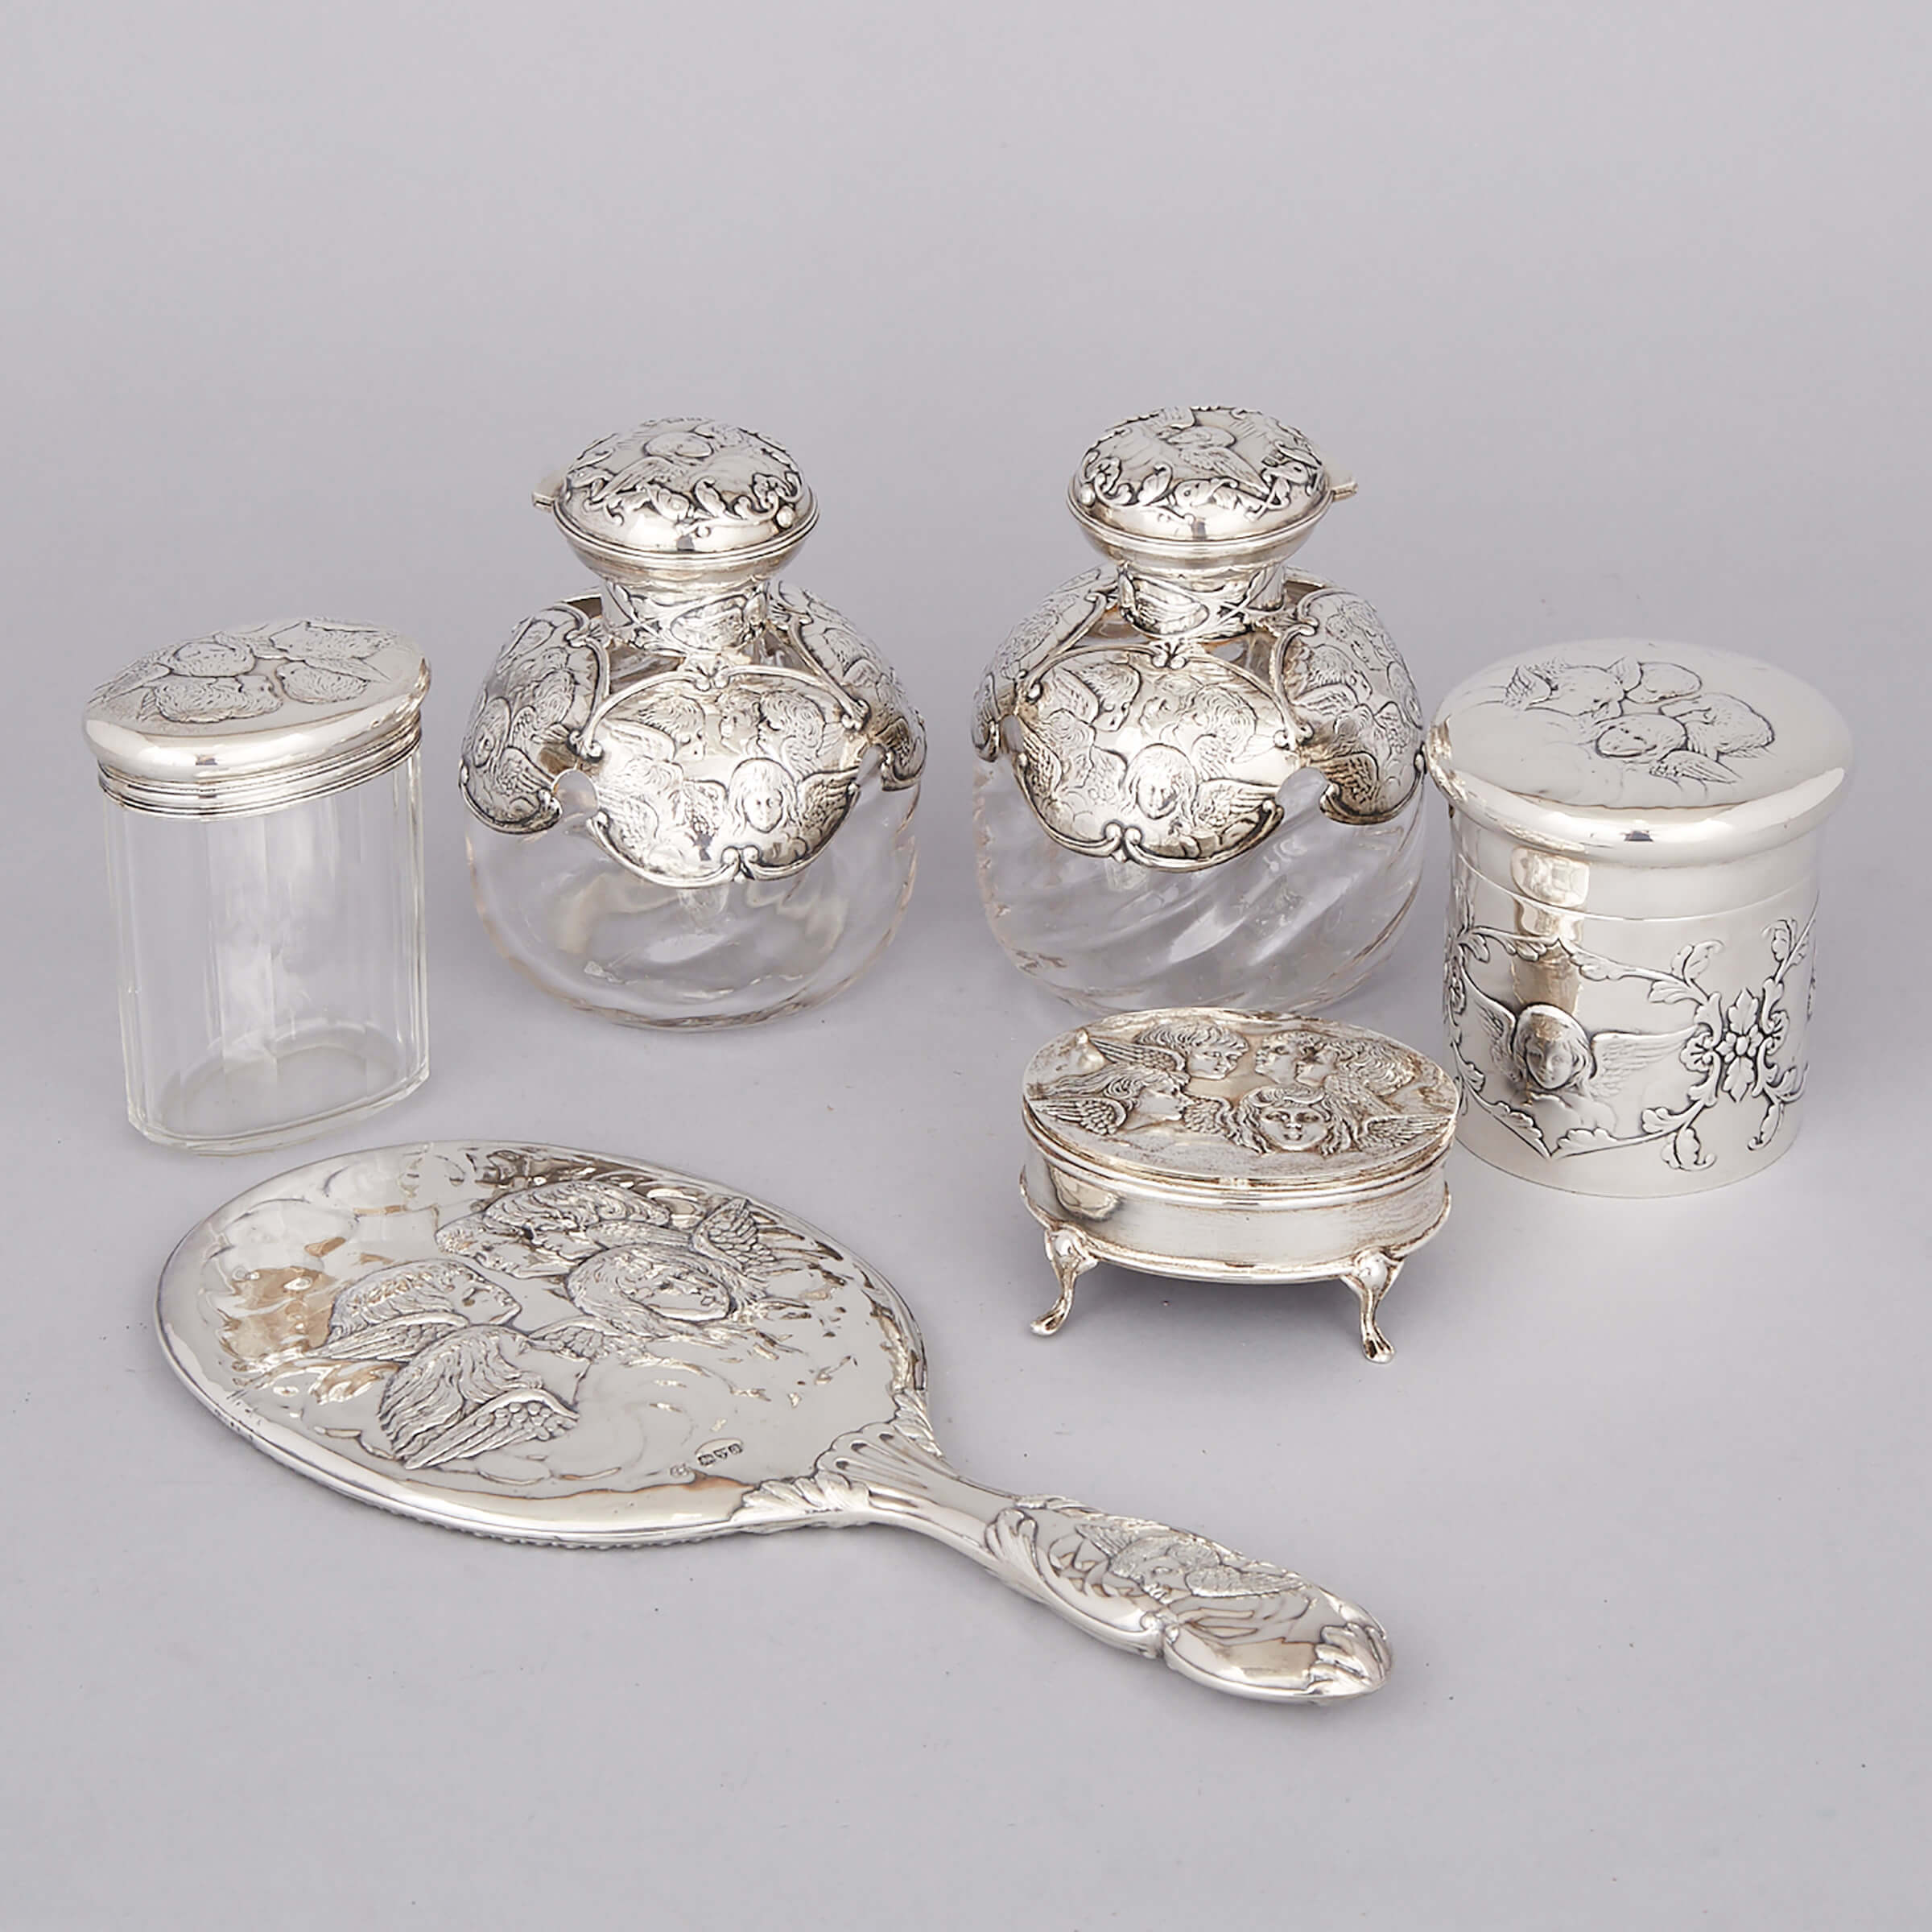 Assembled Edwardian Silver Dressing Table Set, c.1902-11